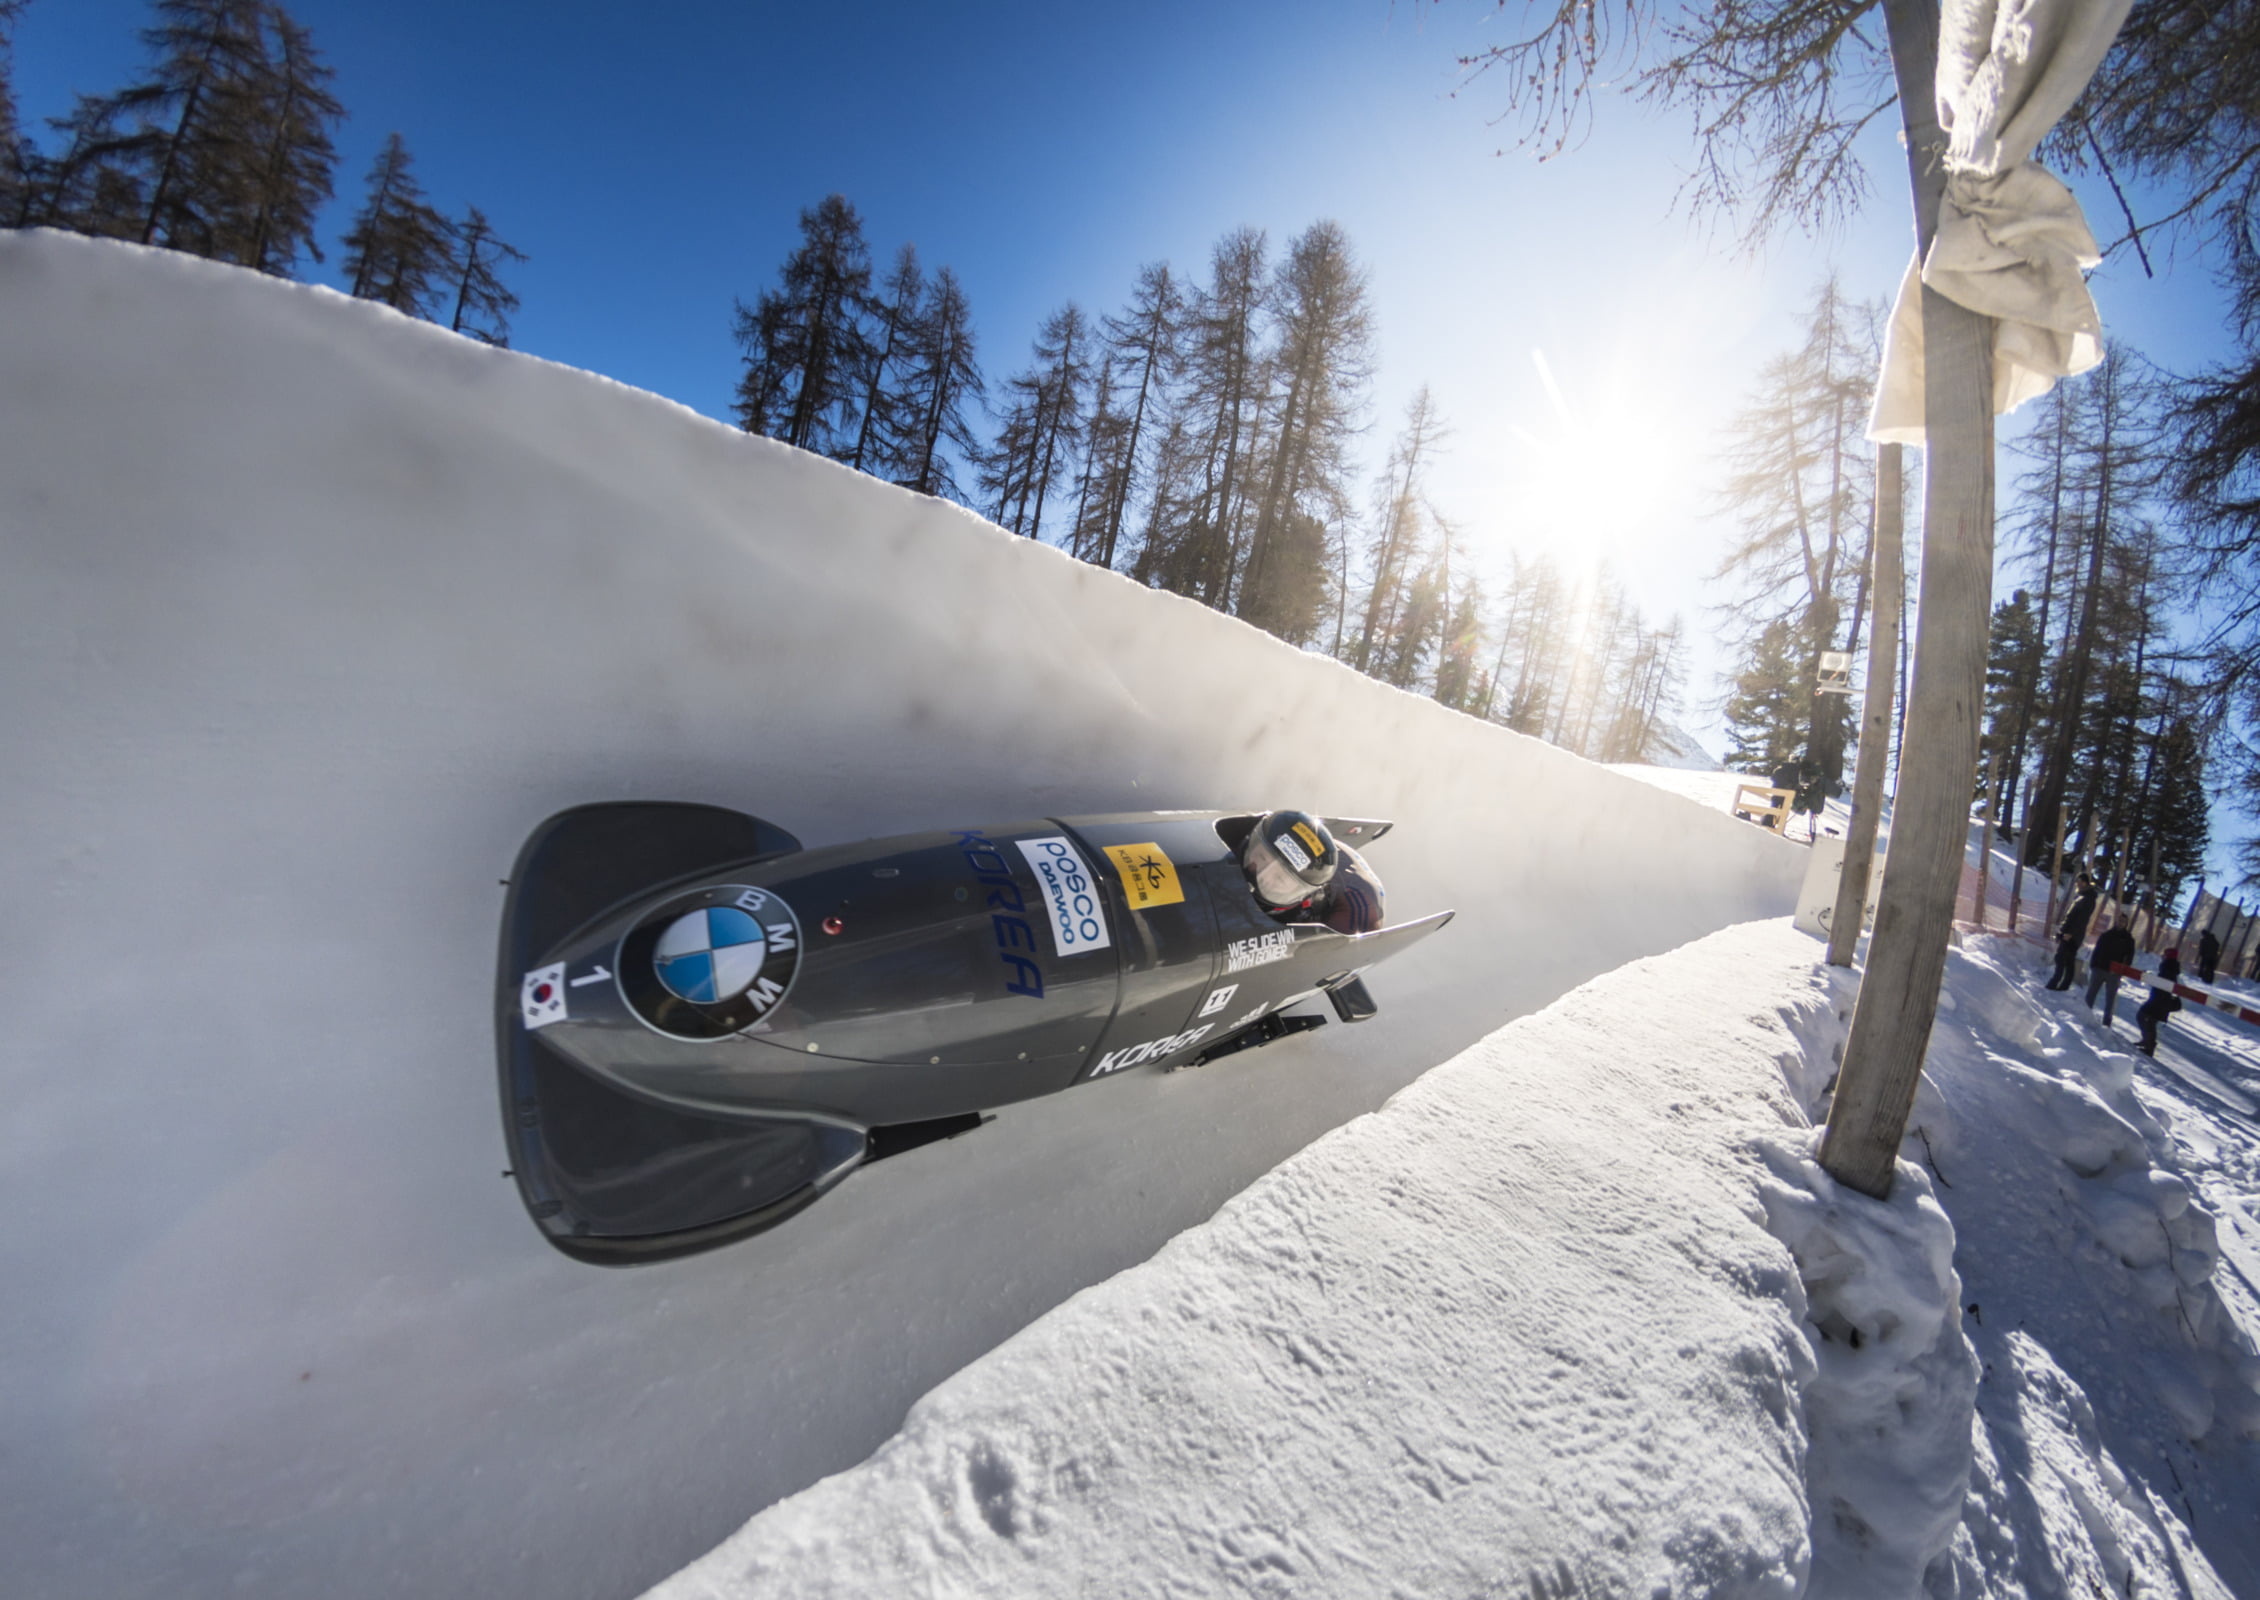 Bobsleigh: A team winter sport that involves making timed runs in a gravity-powered sleigh. 2260x1600 HD Wallpaper.